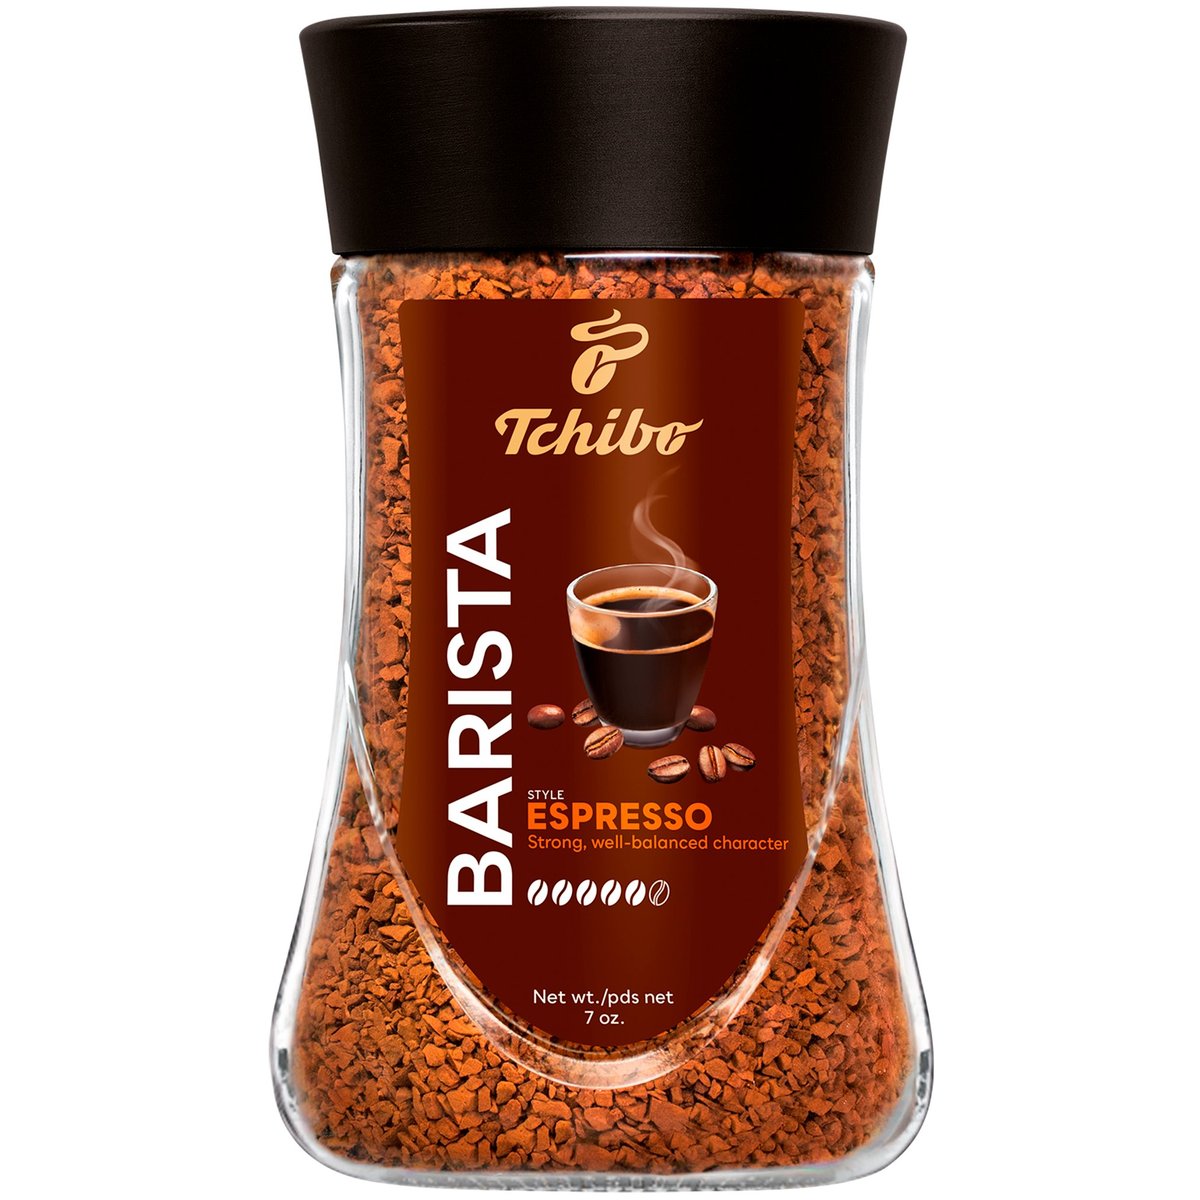 Tchibo Barista Espresso style